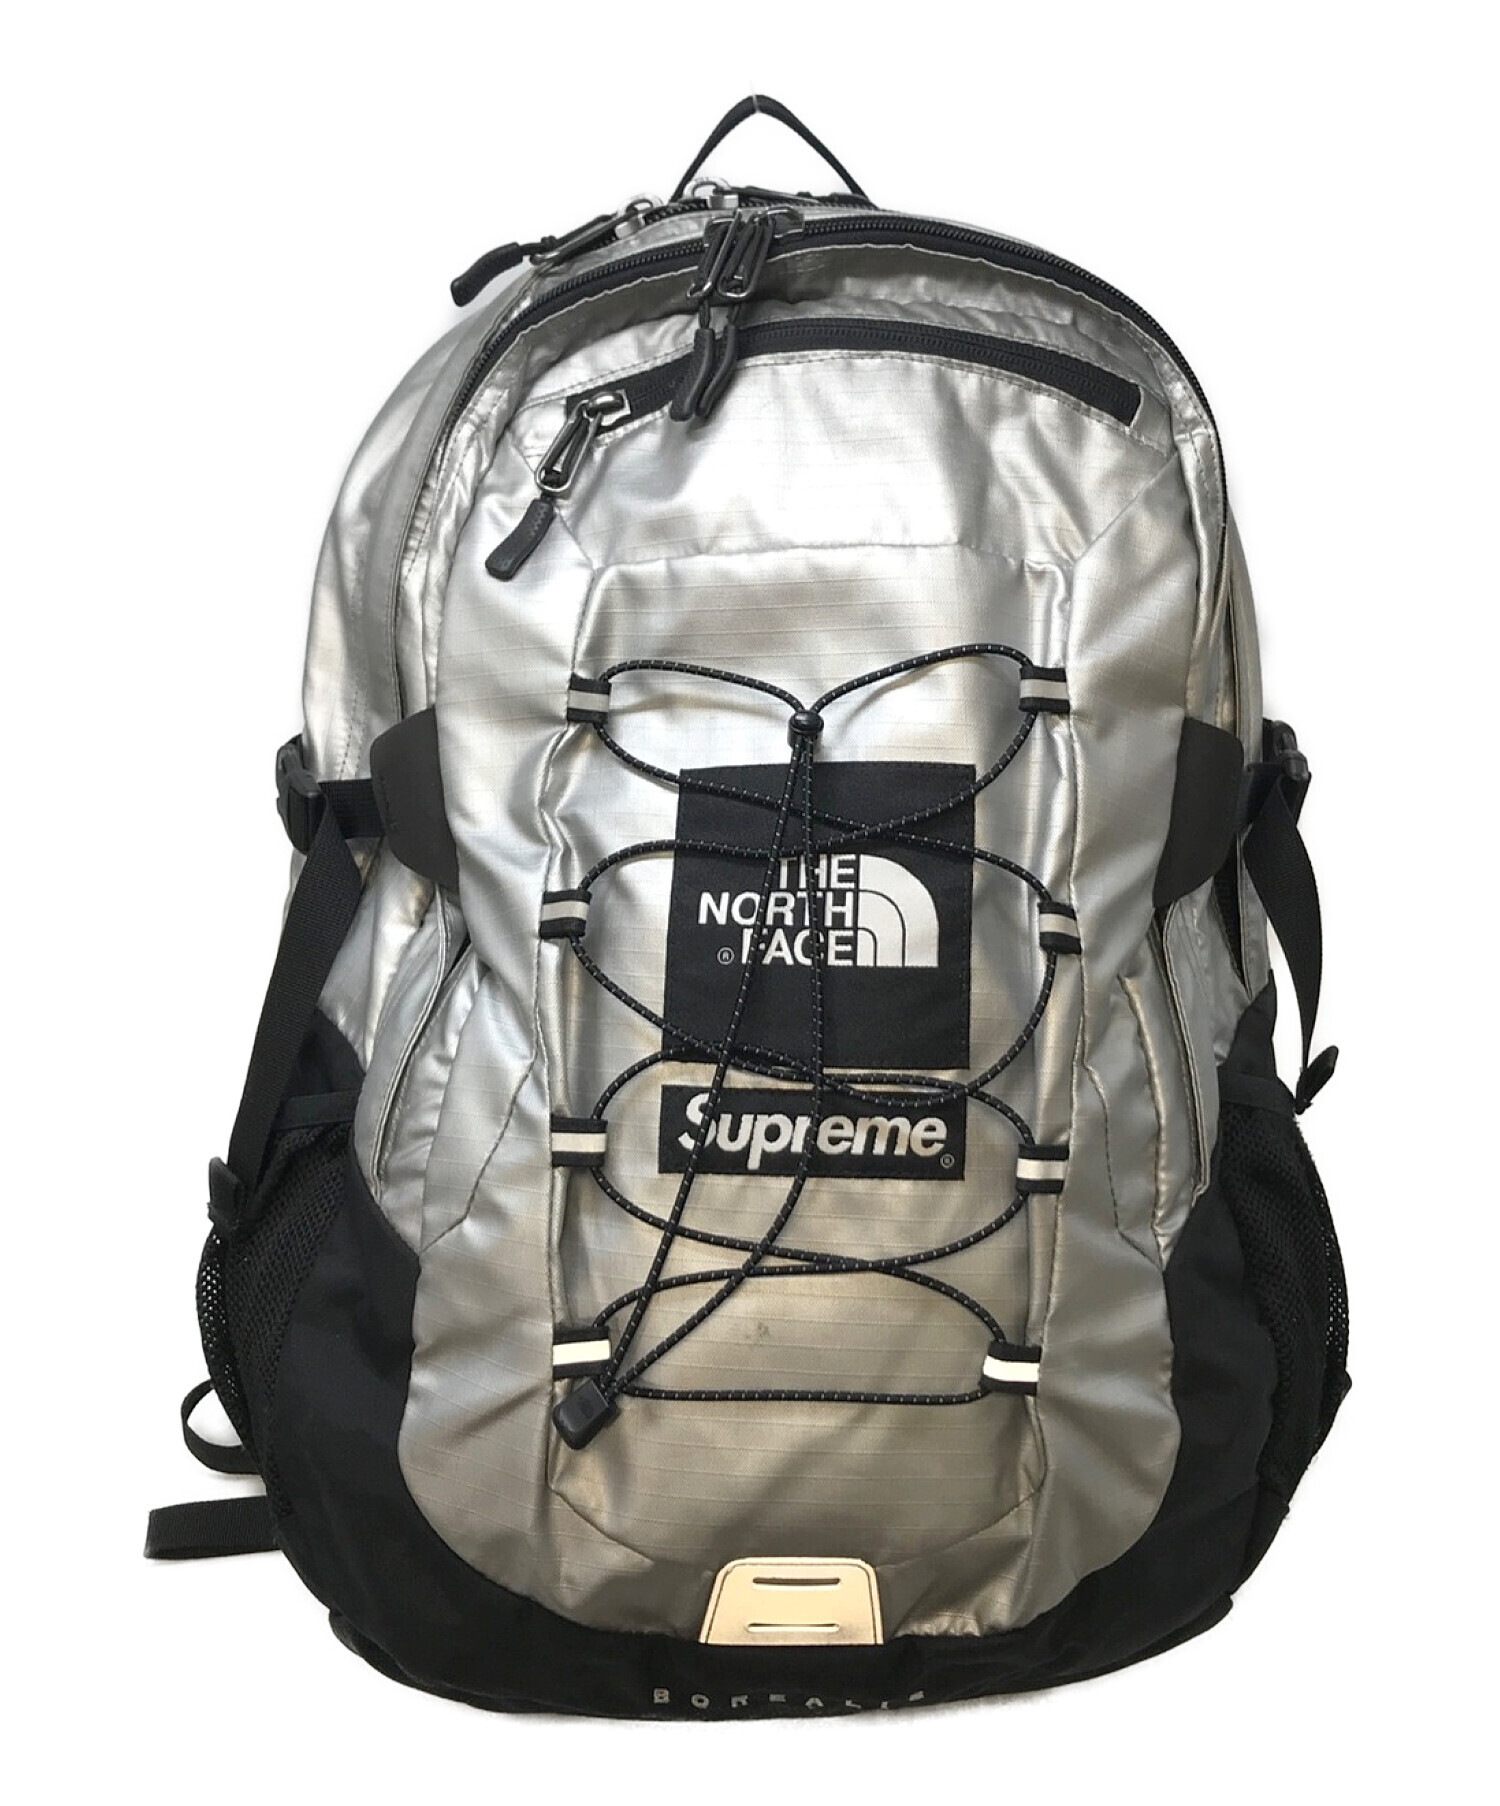 THE NORTH FACE (ザ ノース フェイス) SUPREME (シュプリーム) 18SS Metallic Borealis  Backpack / メタリックボレアリスバックパック シルバー